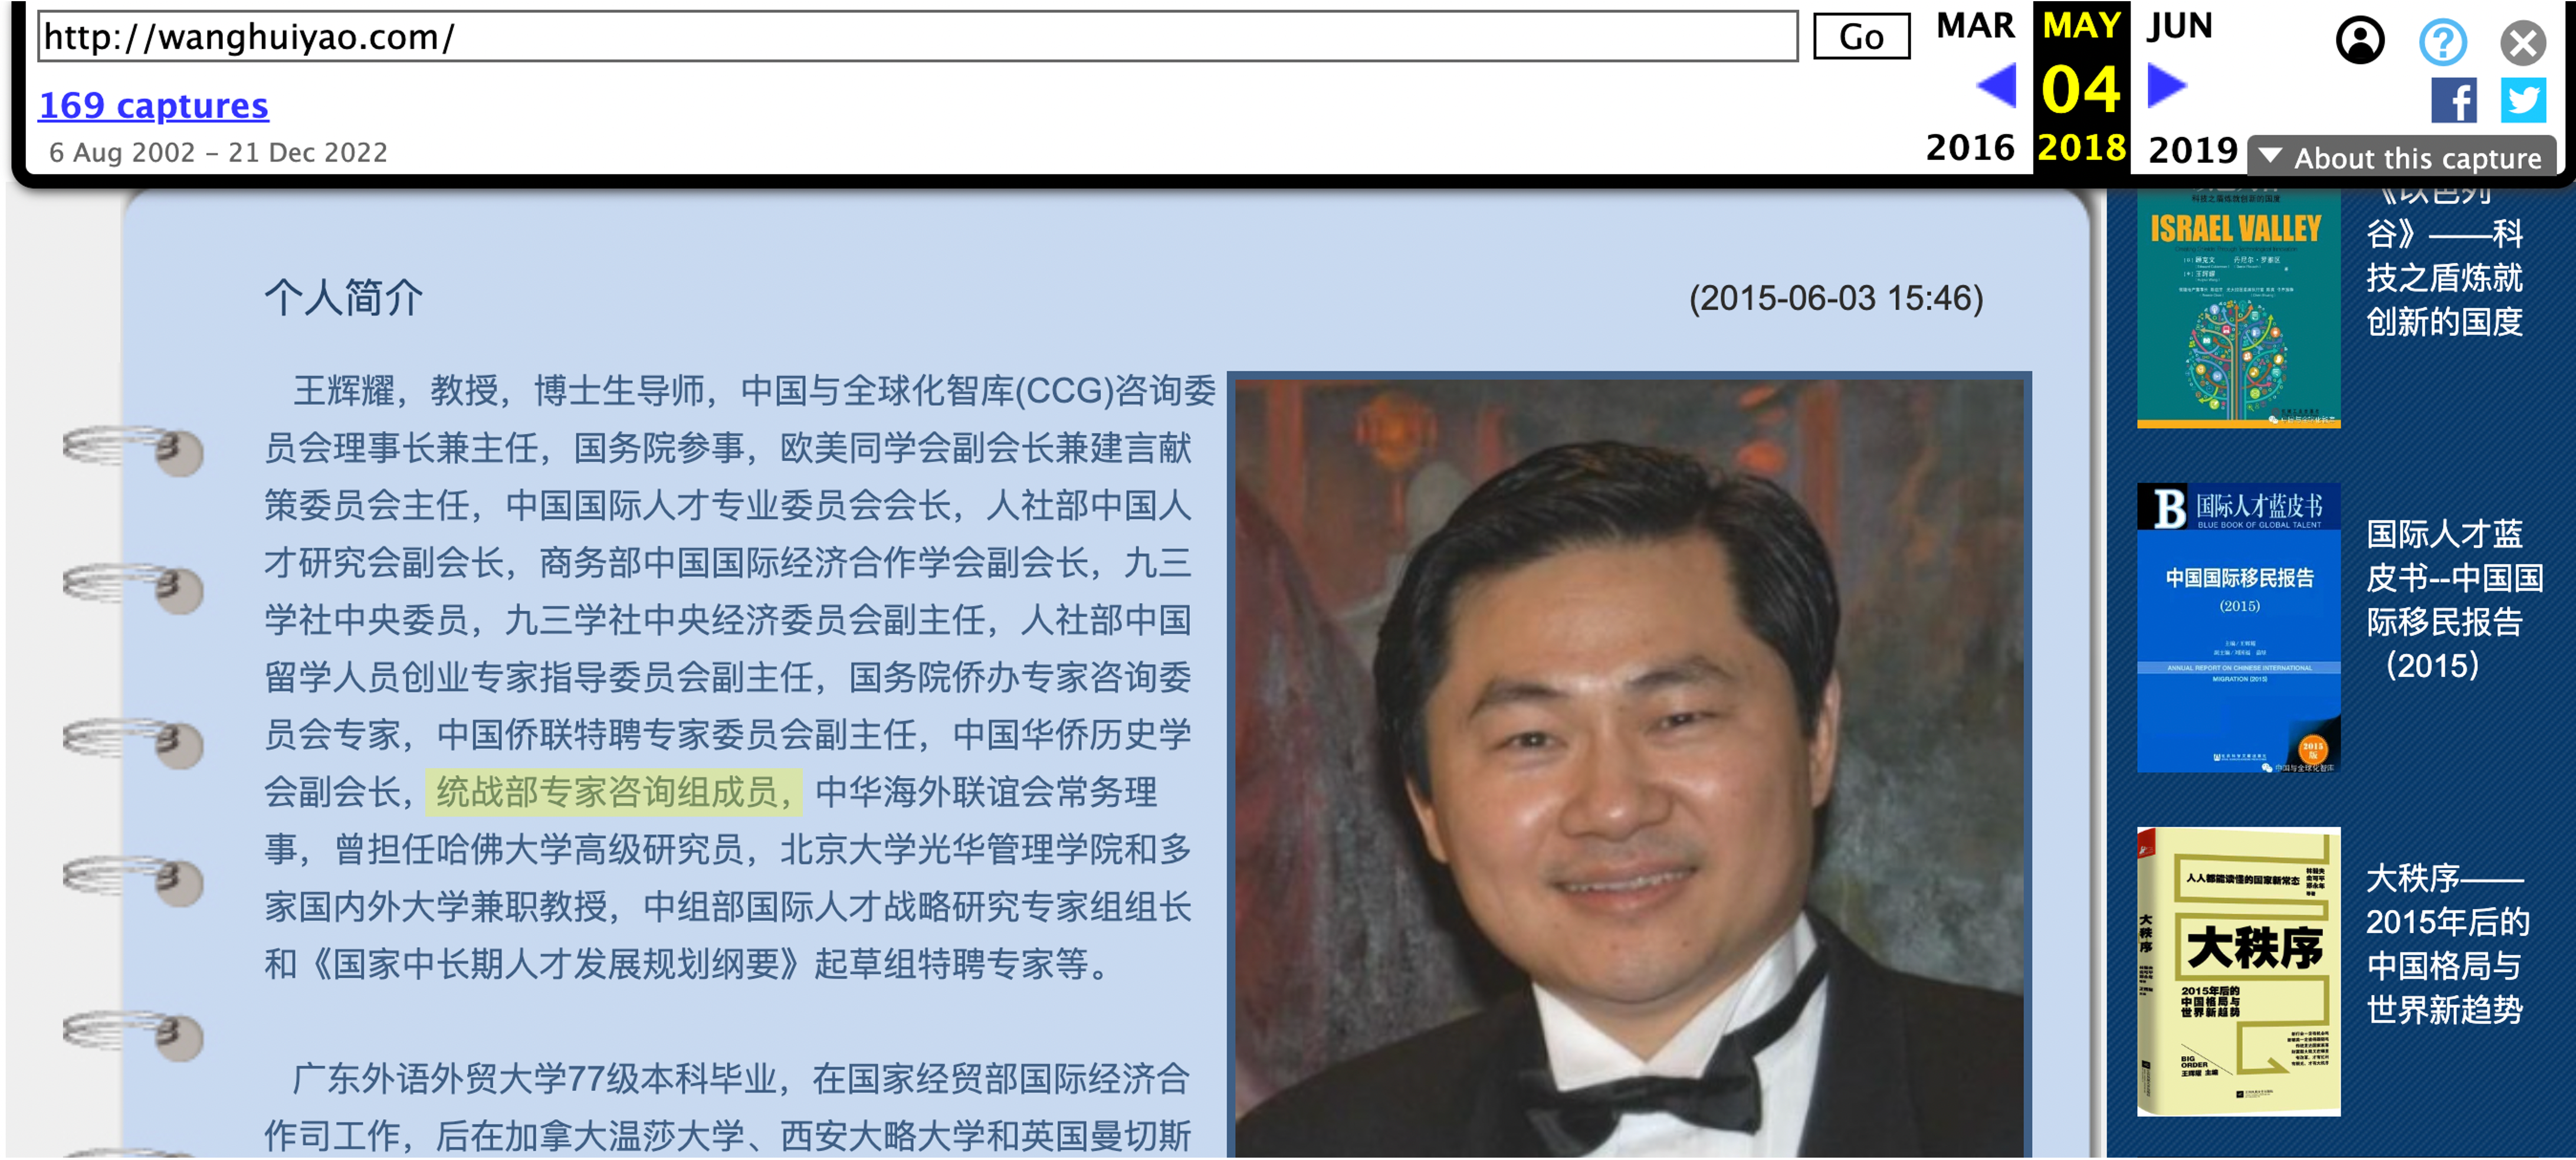 Web archive of Wang's bio